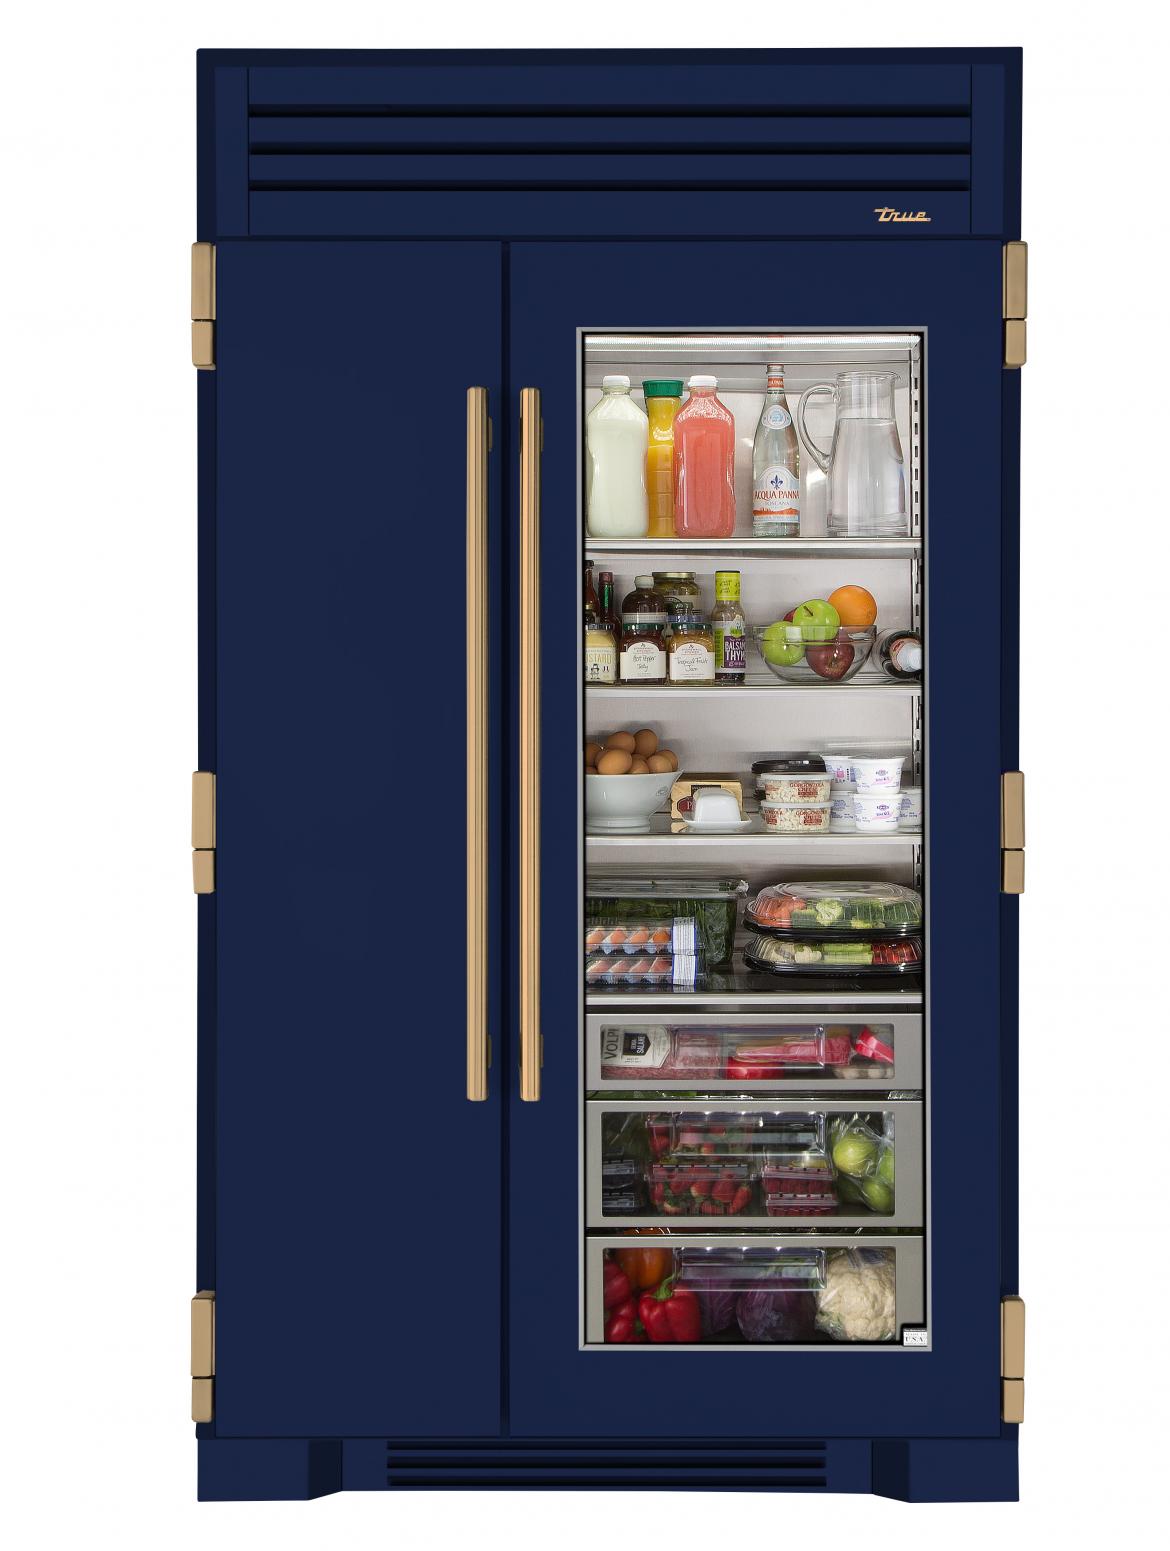 used true refrigerator for sale